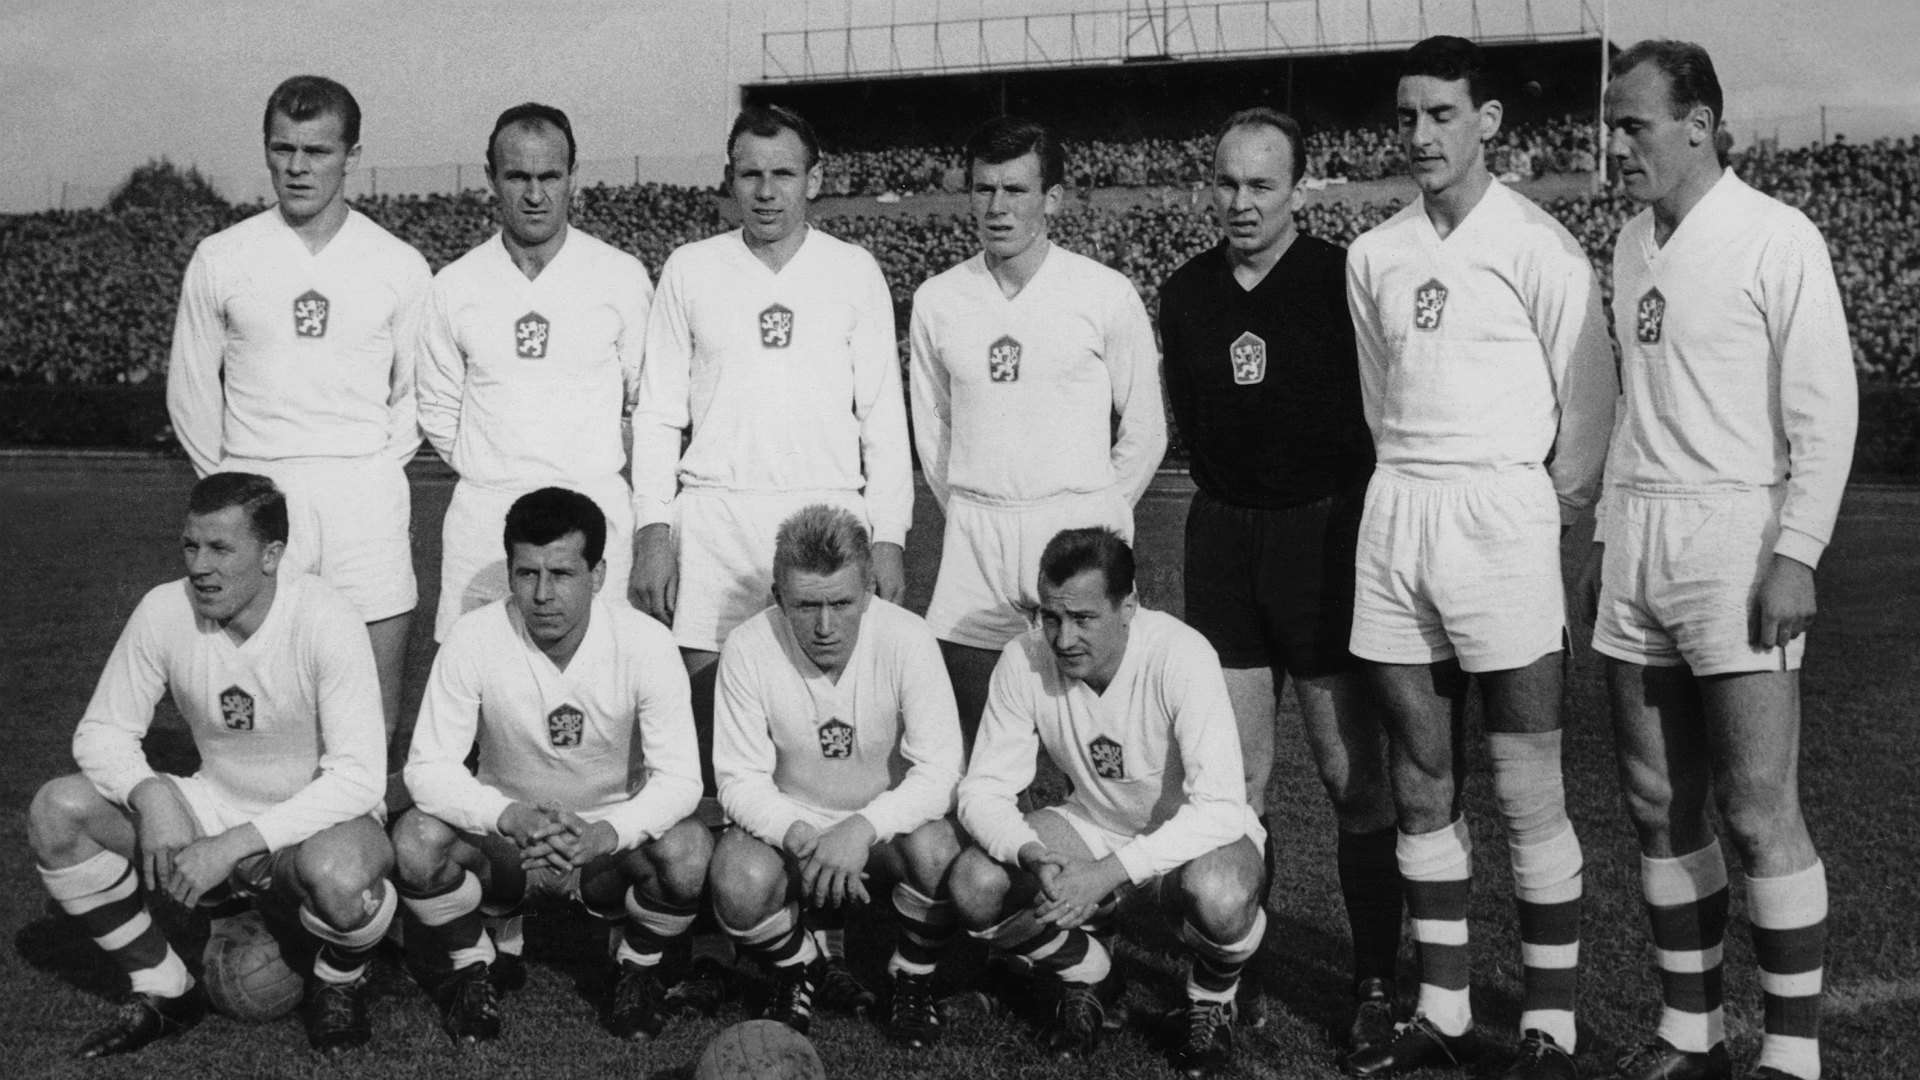 National soccer team from Czechoslovakia